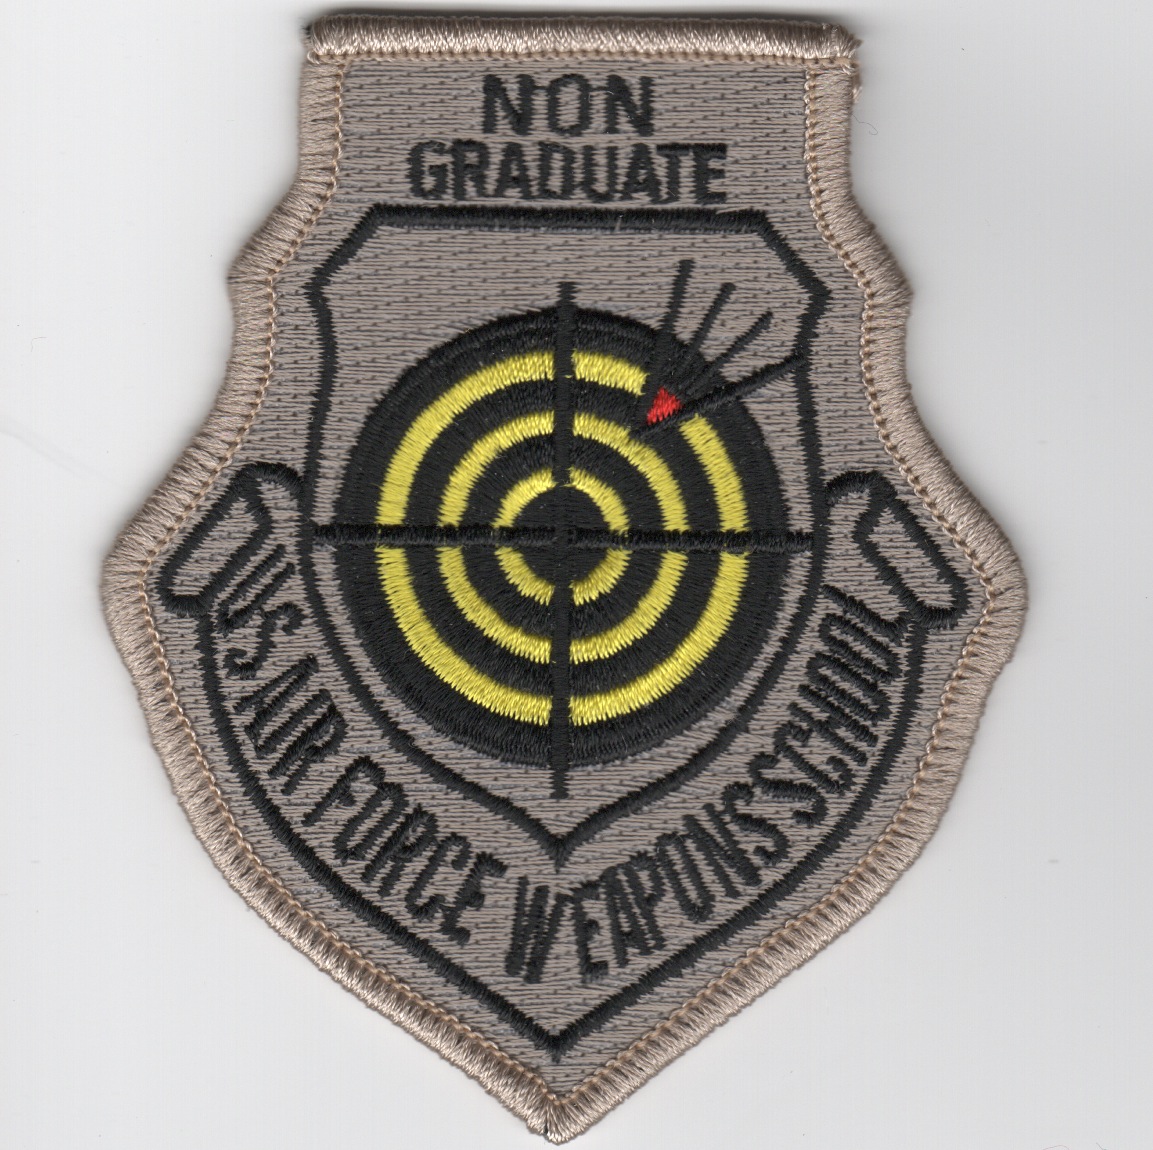 USAF Weapons School NON-Graduate Patch (No Velcro)